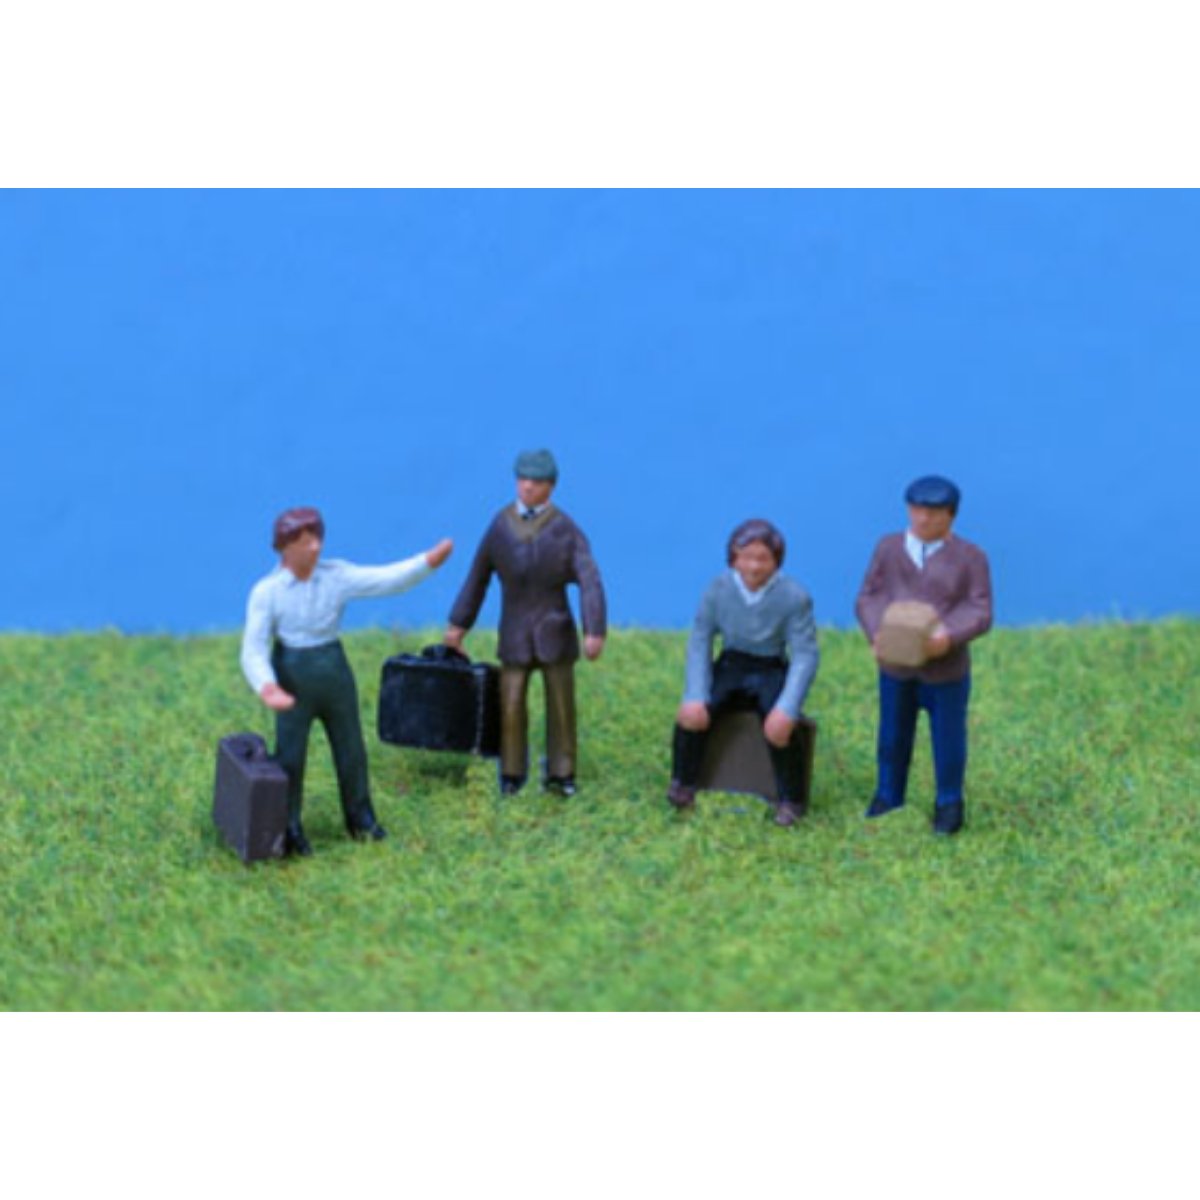 P&D Marsh PDZ01 Painted People with Luggage (OO Gauge) - Phillips Hobbies